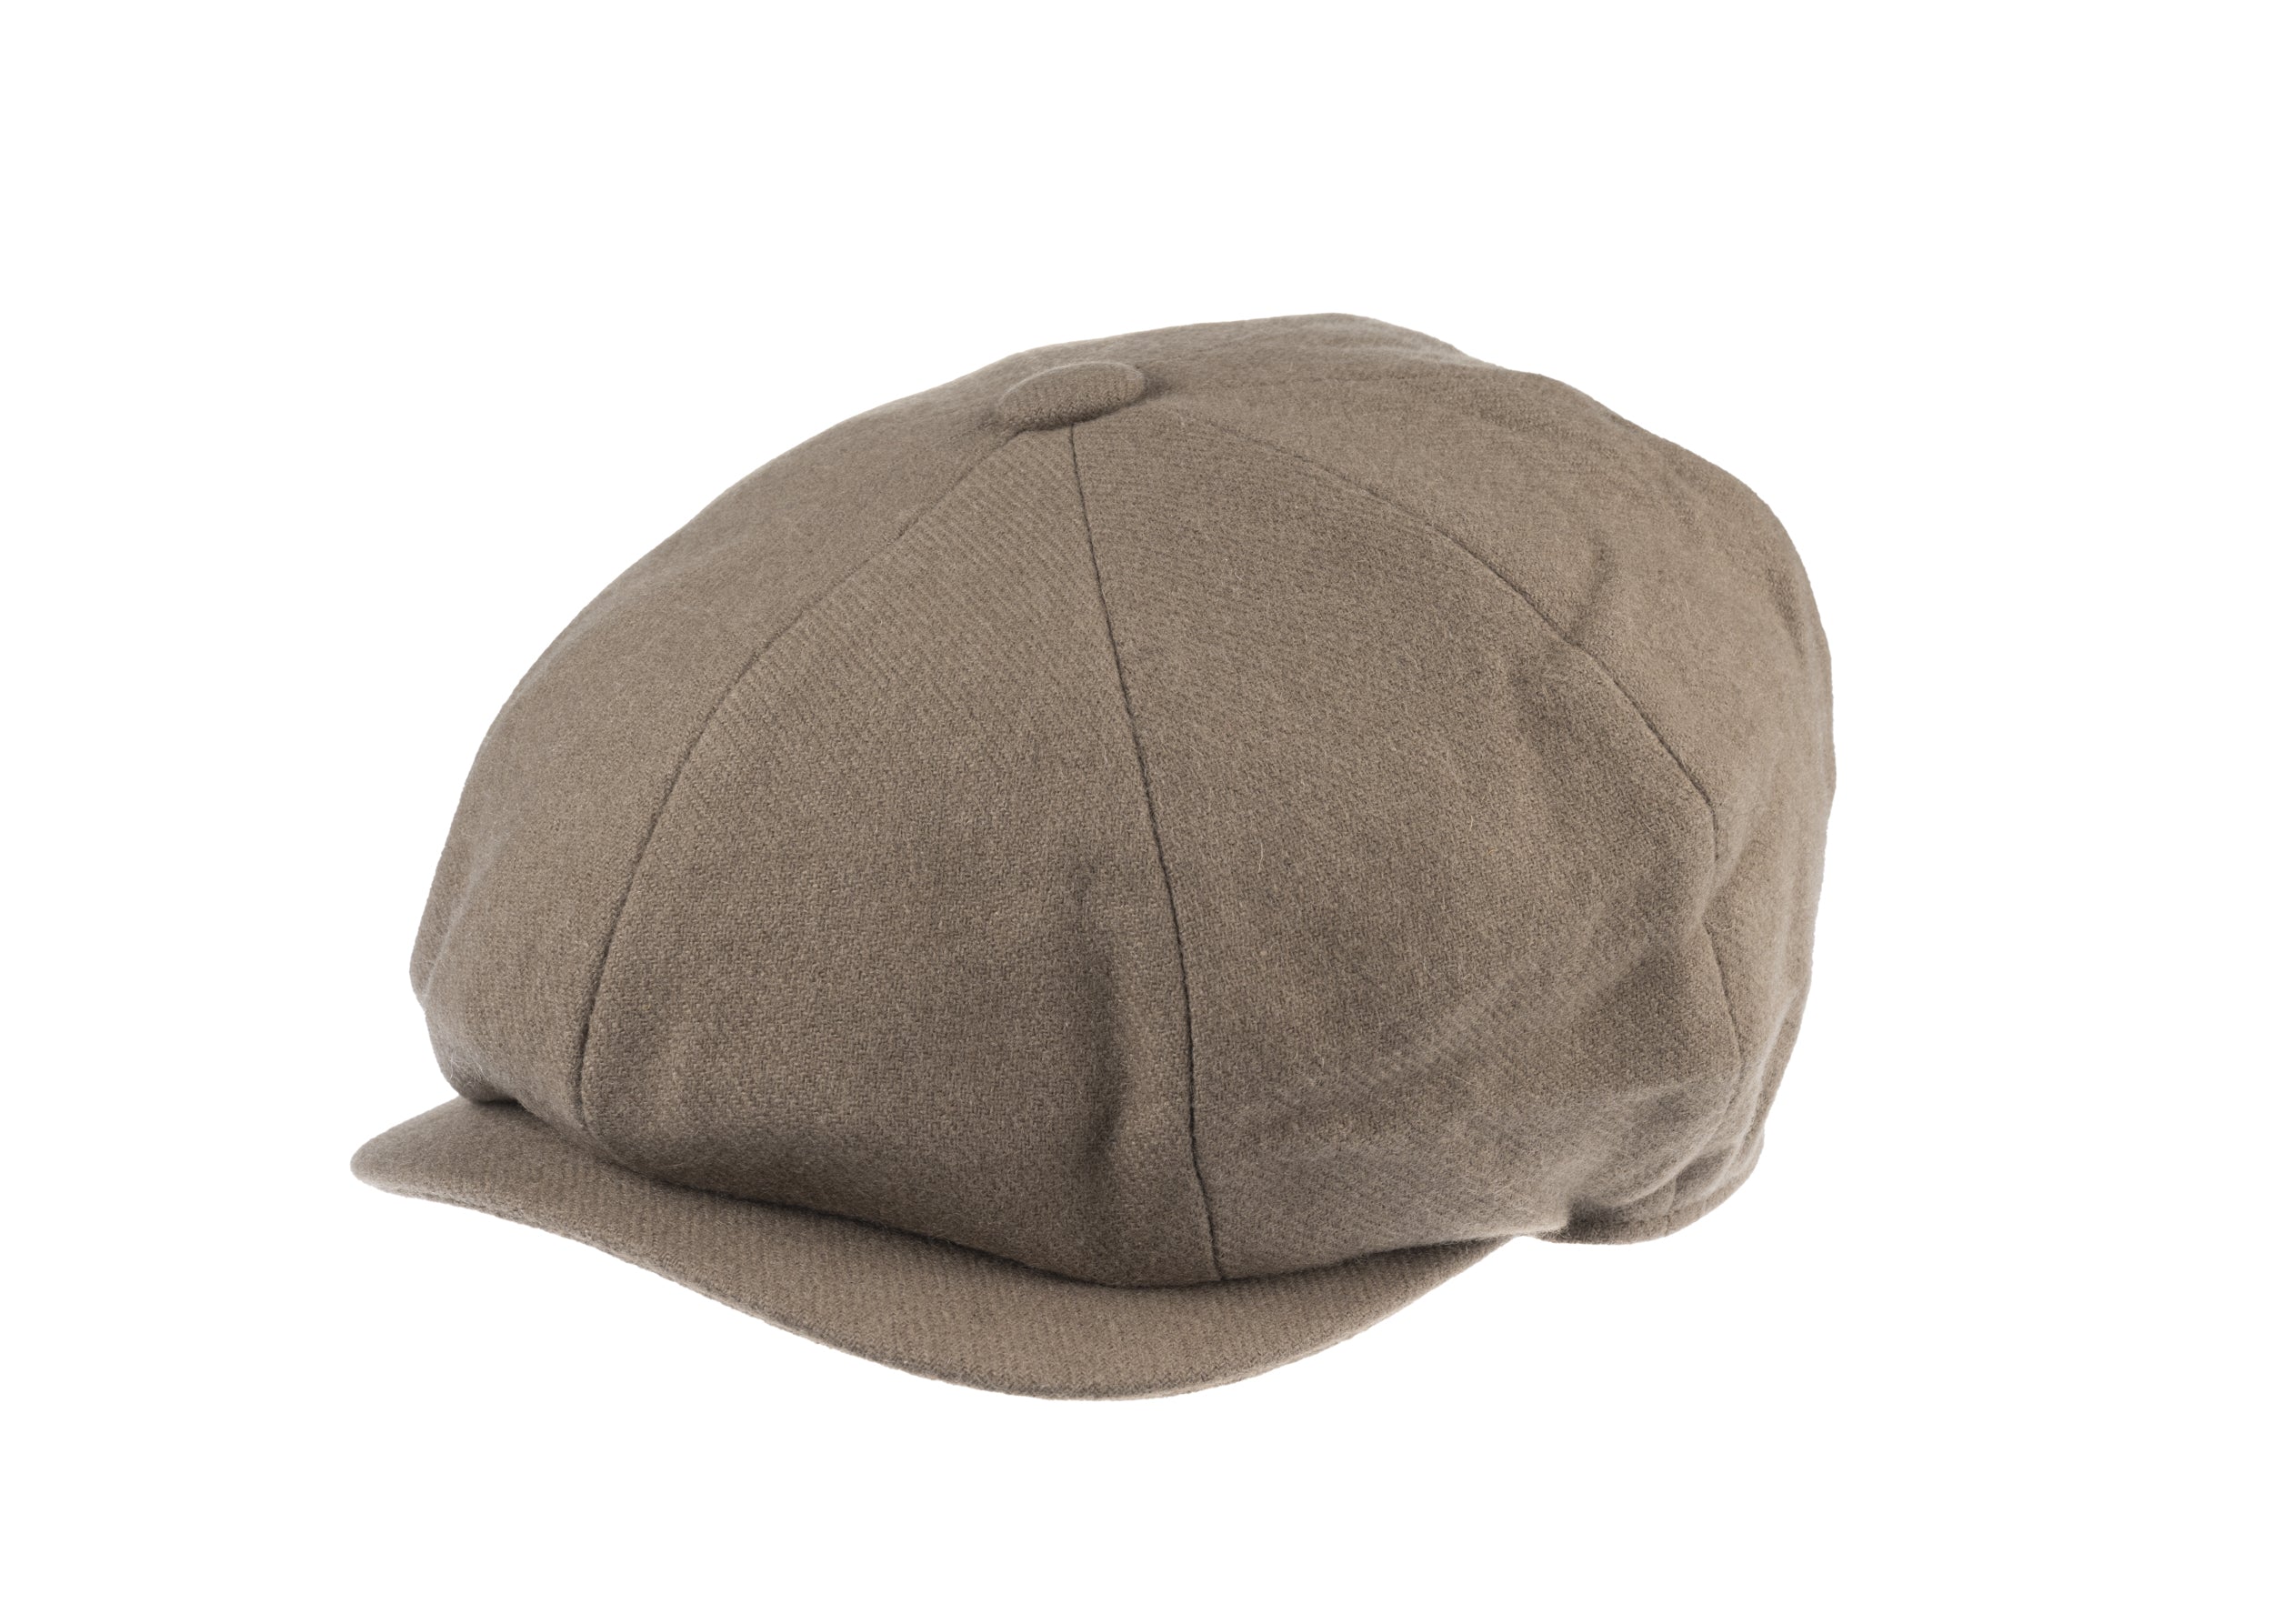 Josh 8 piece baker boy cap in cashmere/wool blend fabric in Light Brown